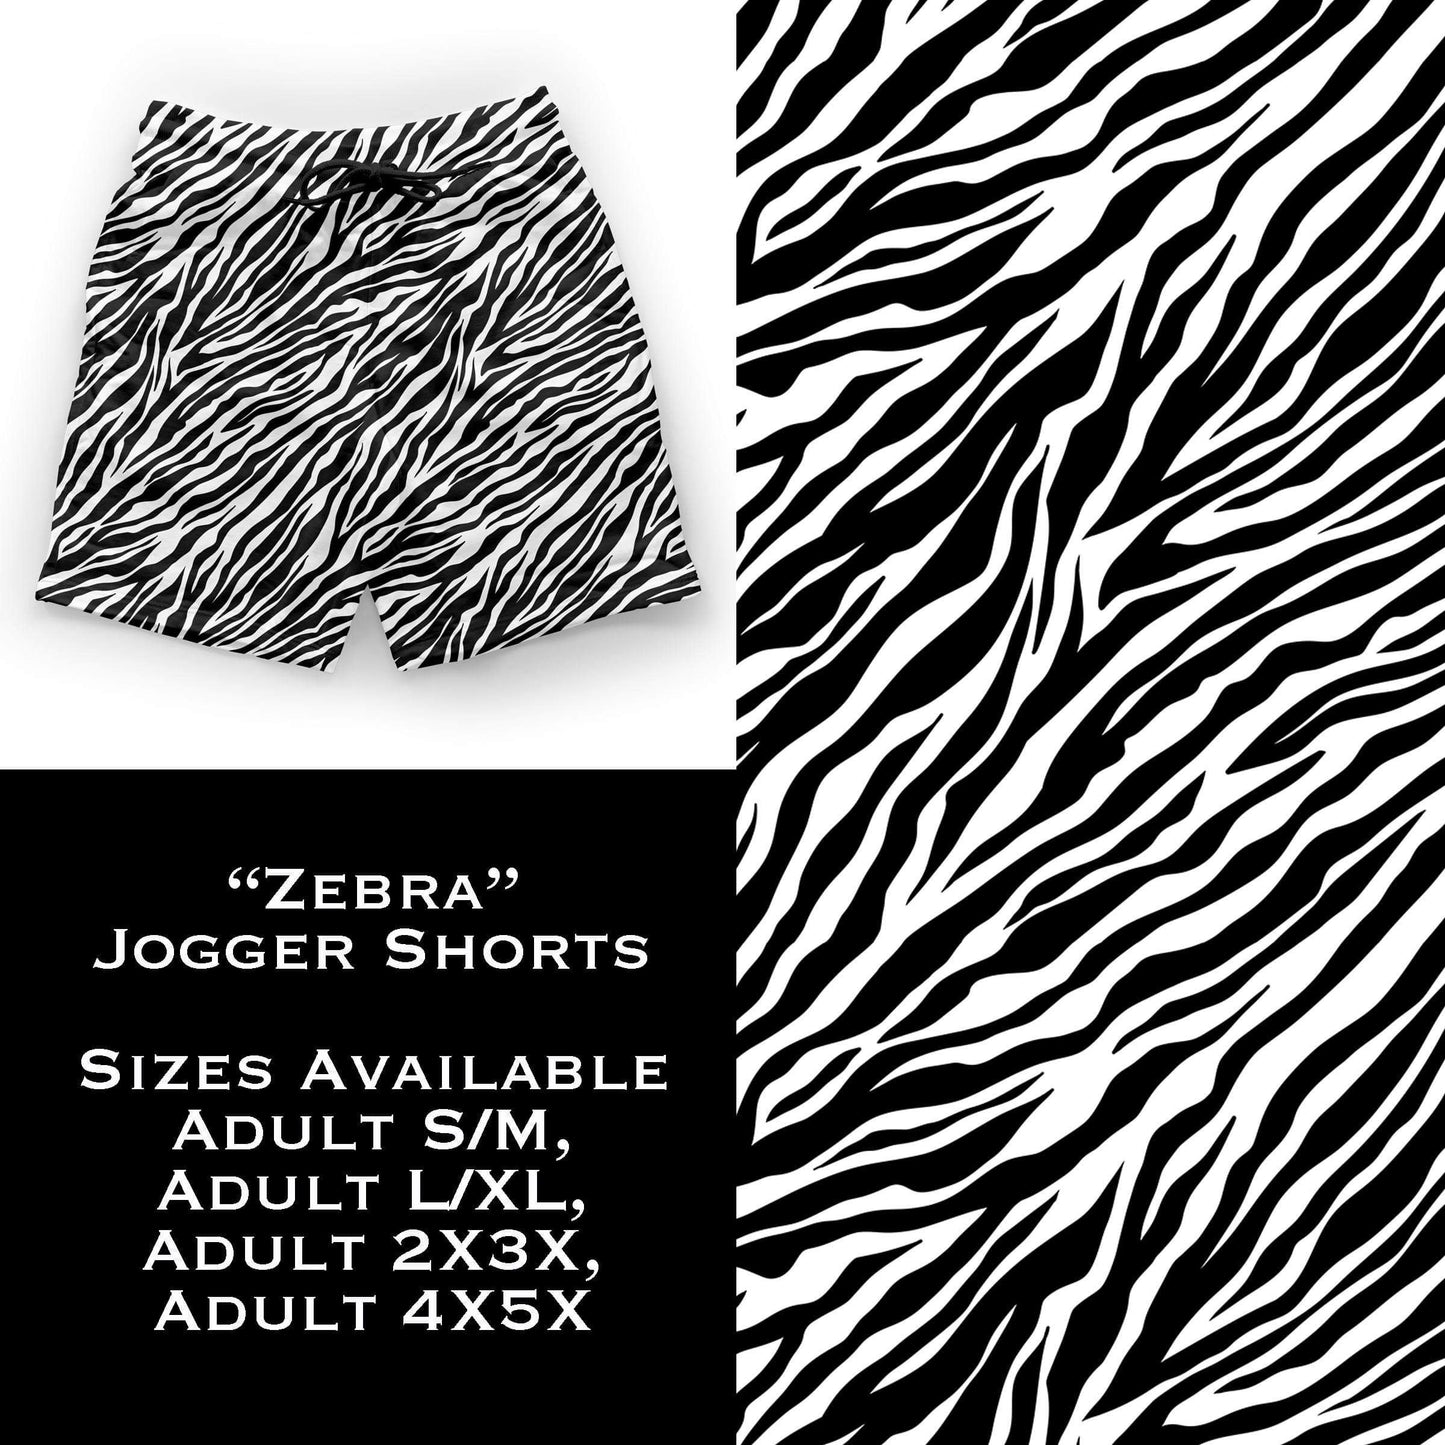 Zebra Jogger Shorts